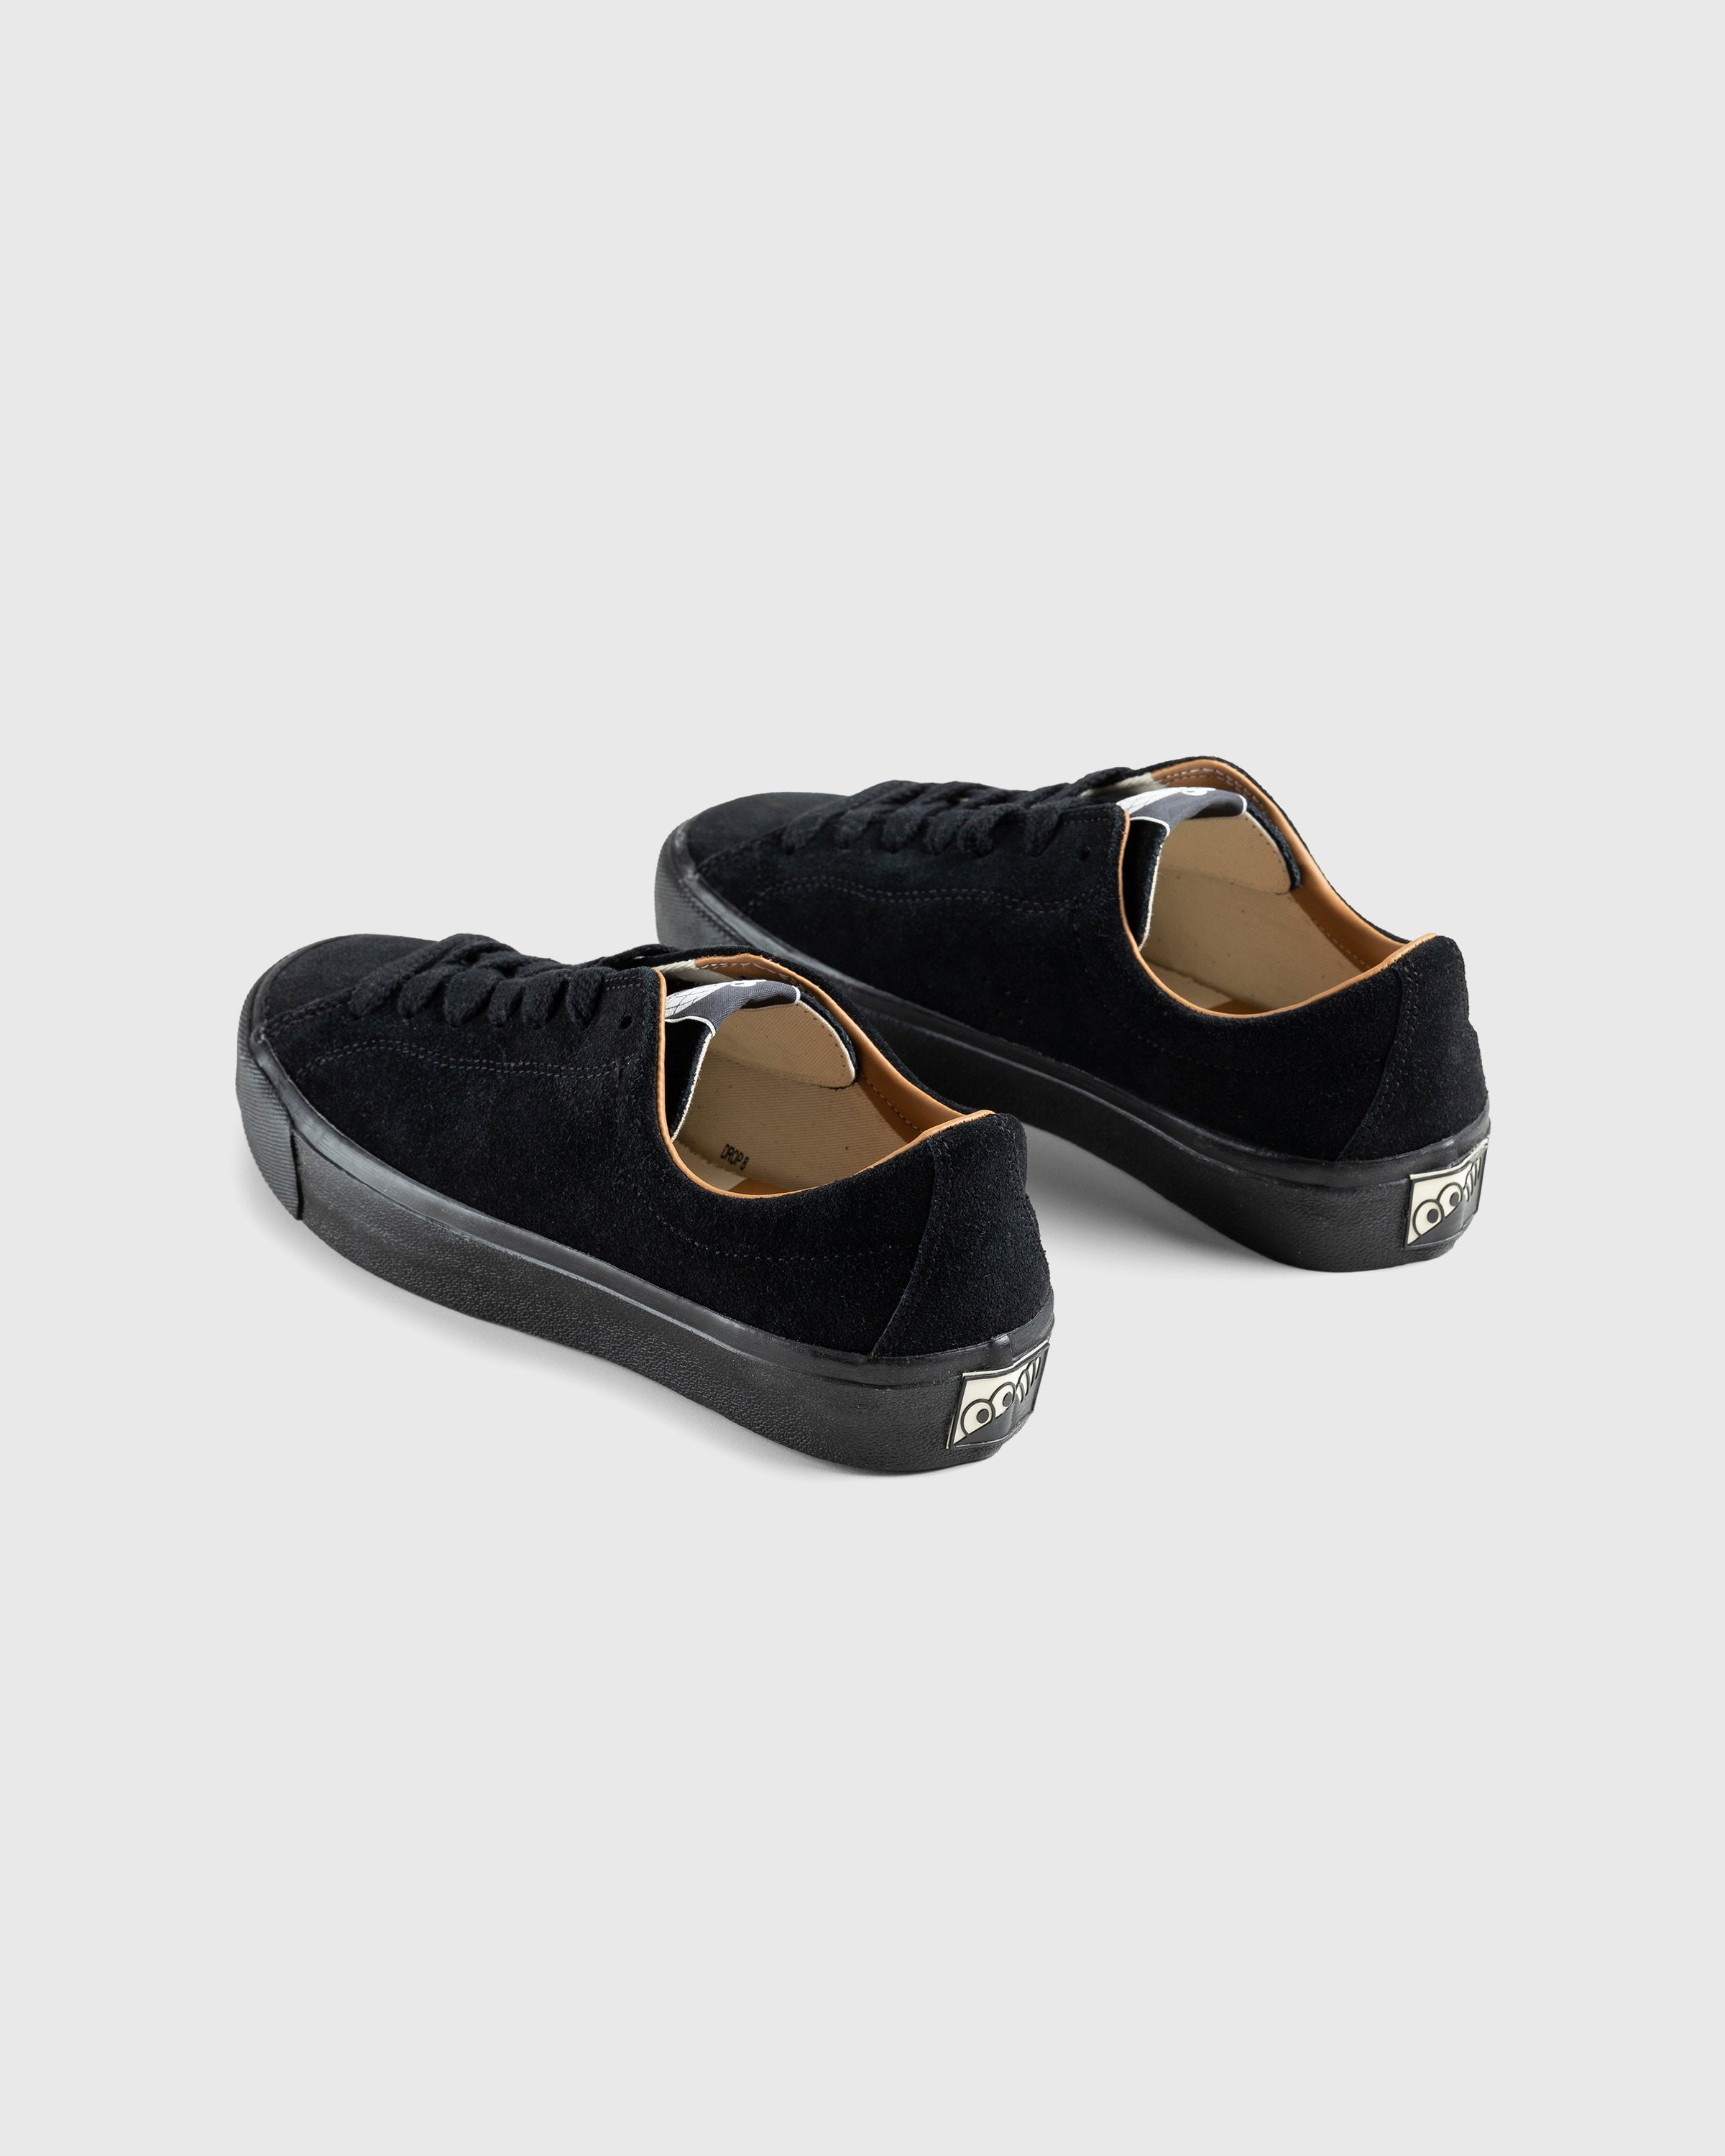 Last Resort AB - VM003-Suede LO Black/Black - Footwear - Black - Image 4